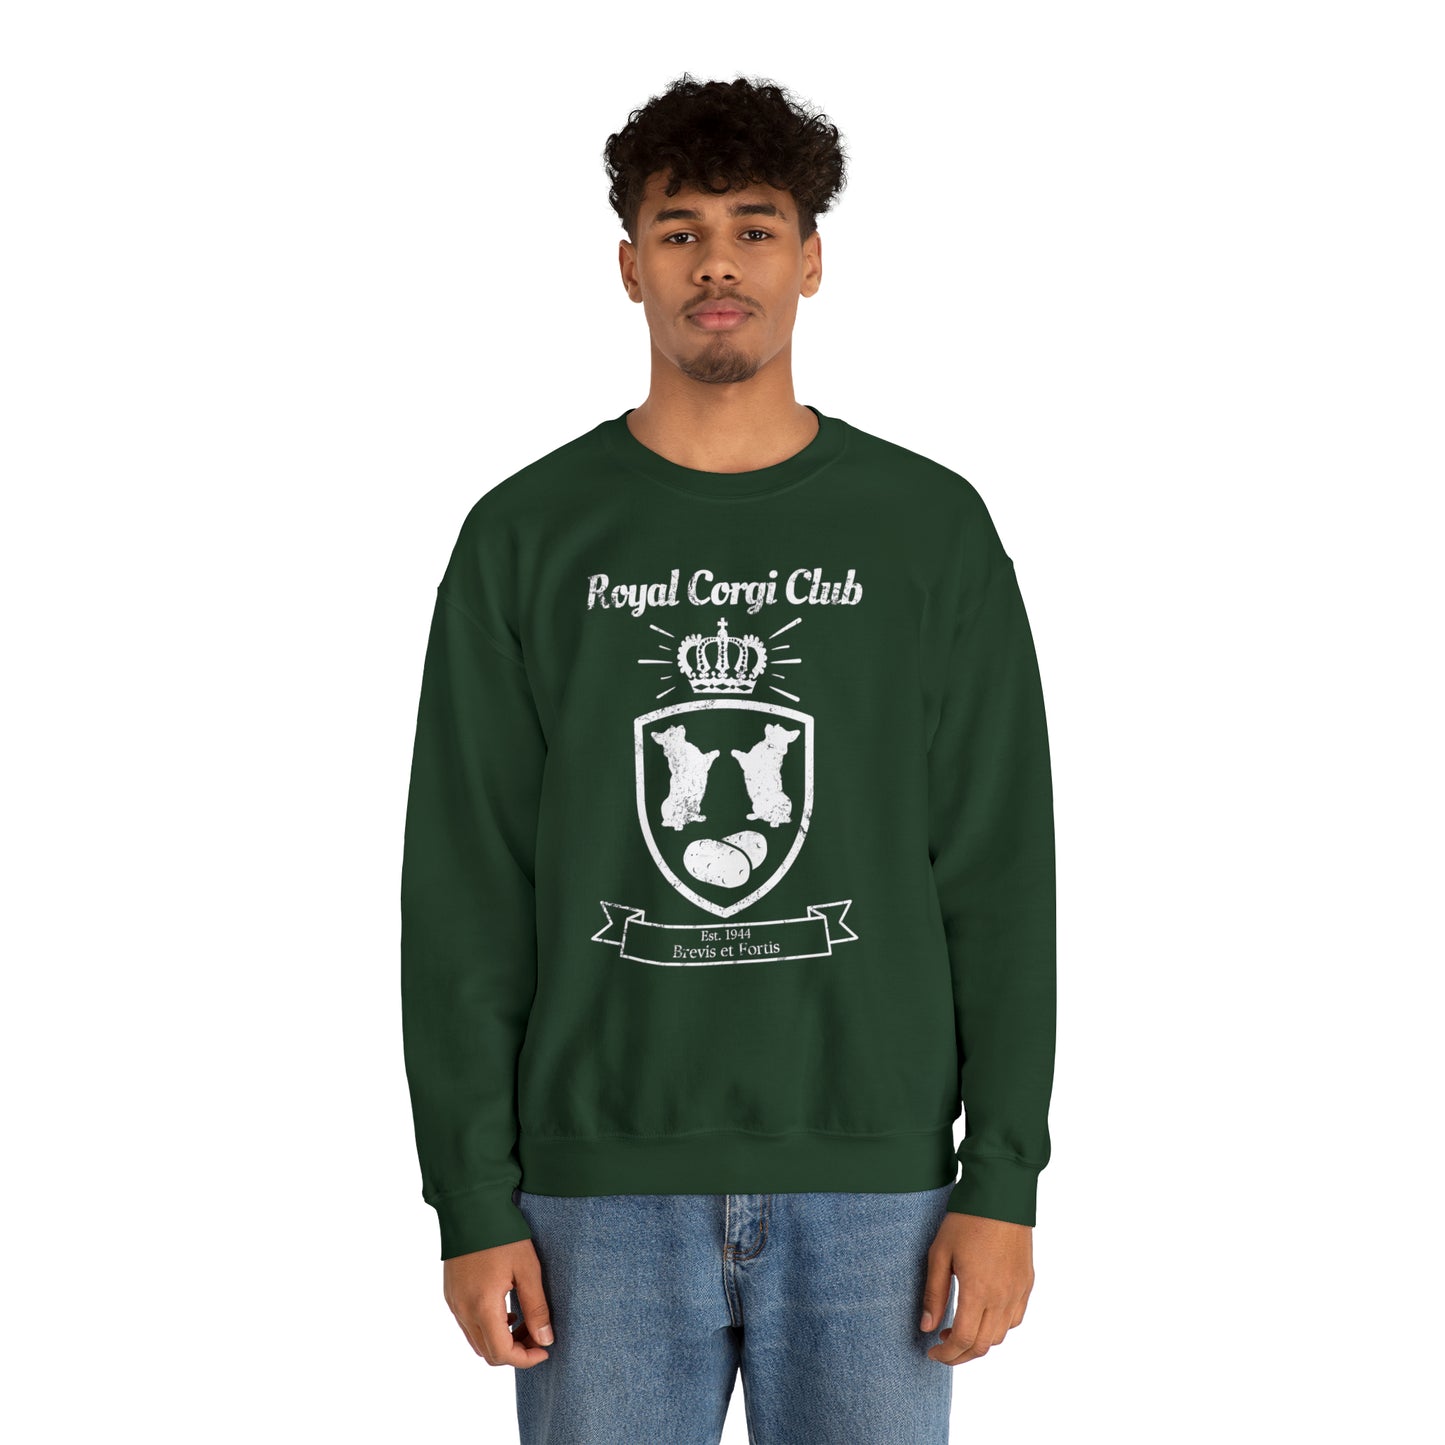 Corgi Sweatshirt Royal Corgi Club Distressed Women & Men